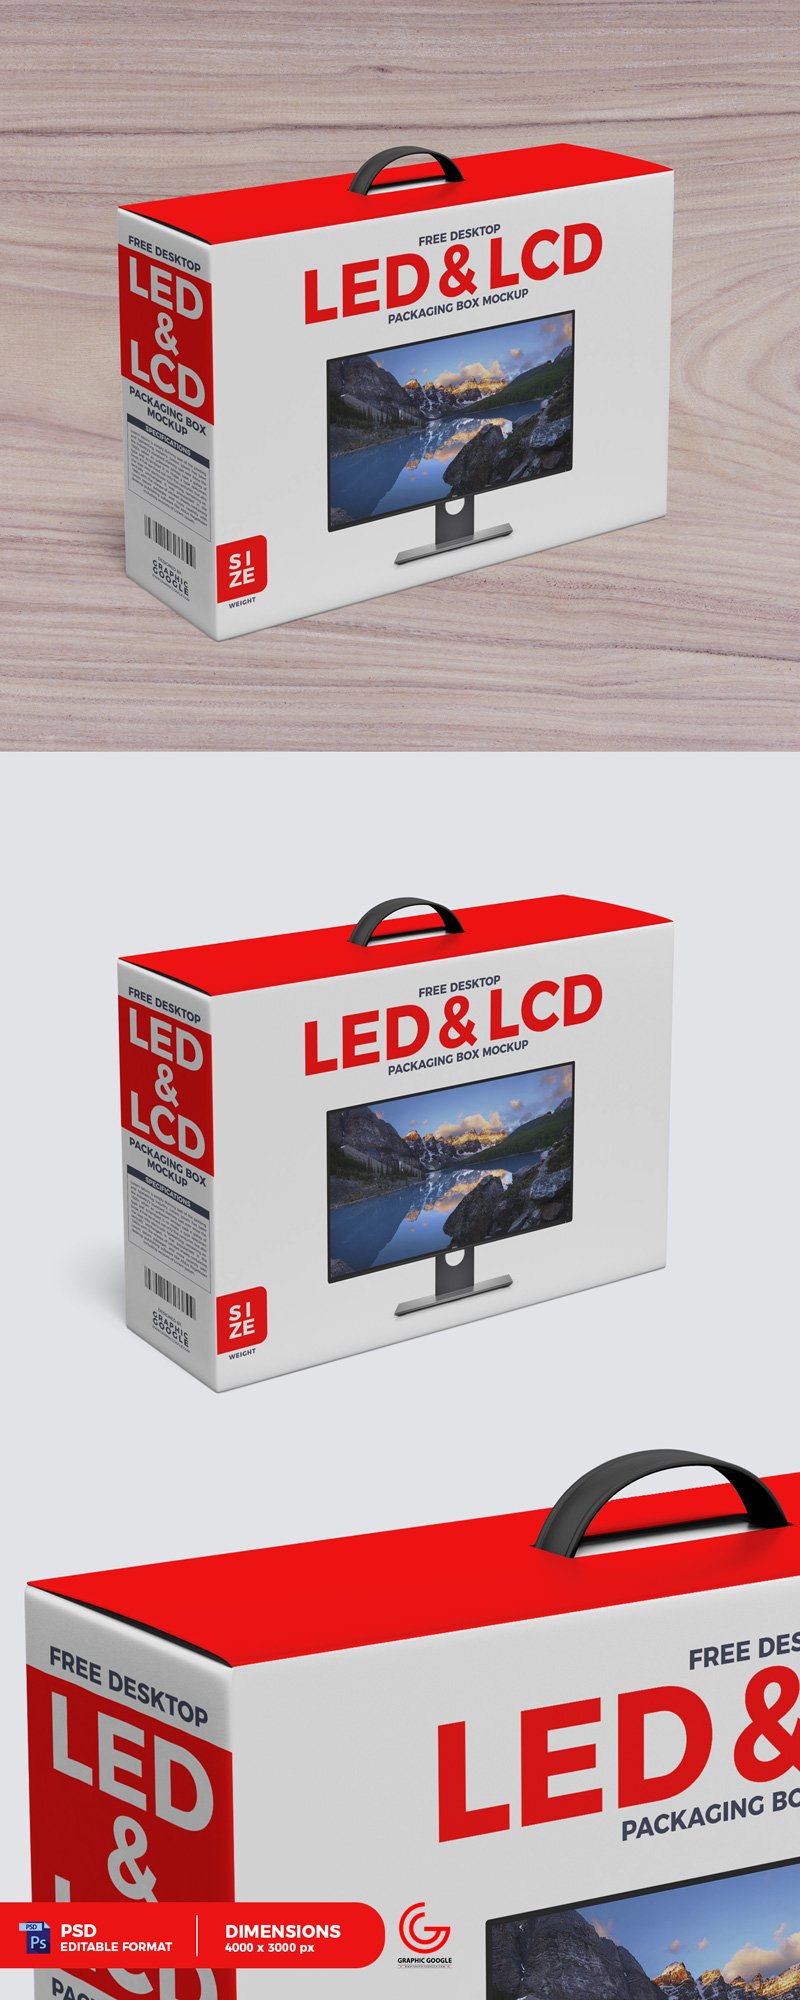 LED TV Packaging Mockup PSD